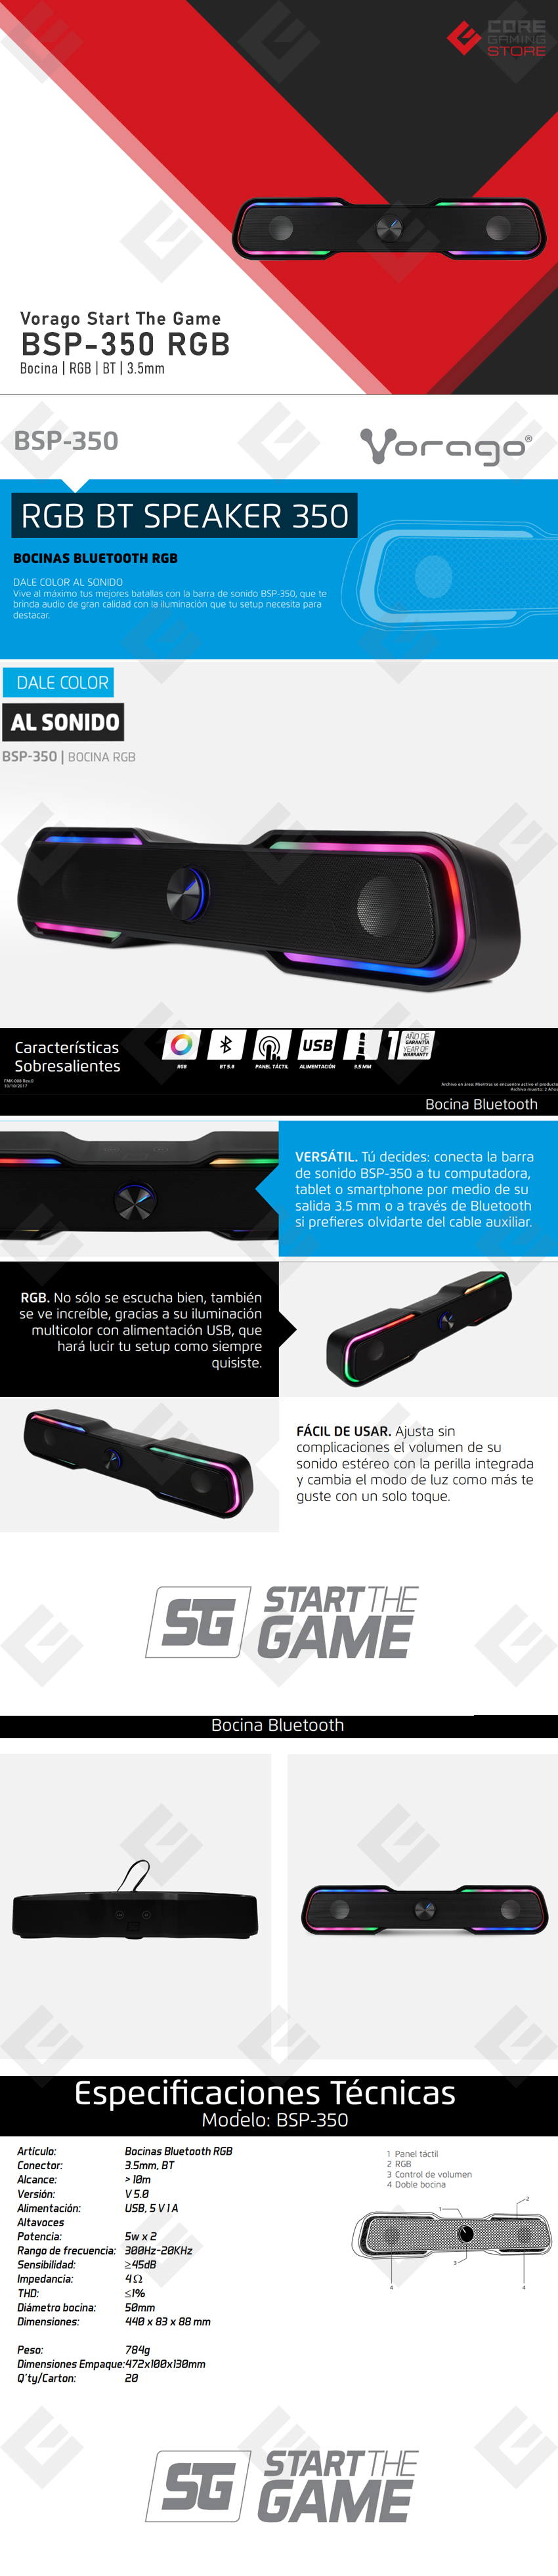 Bocina Vorago Start the Game BSP-350, Bluetooth, 3.5mm, USB. Iluminación RGB, Negro